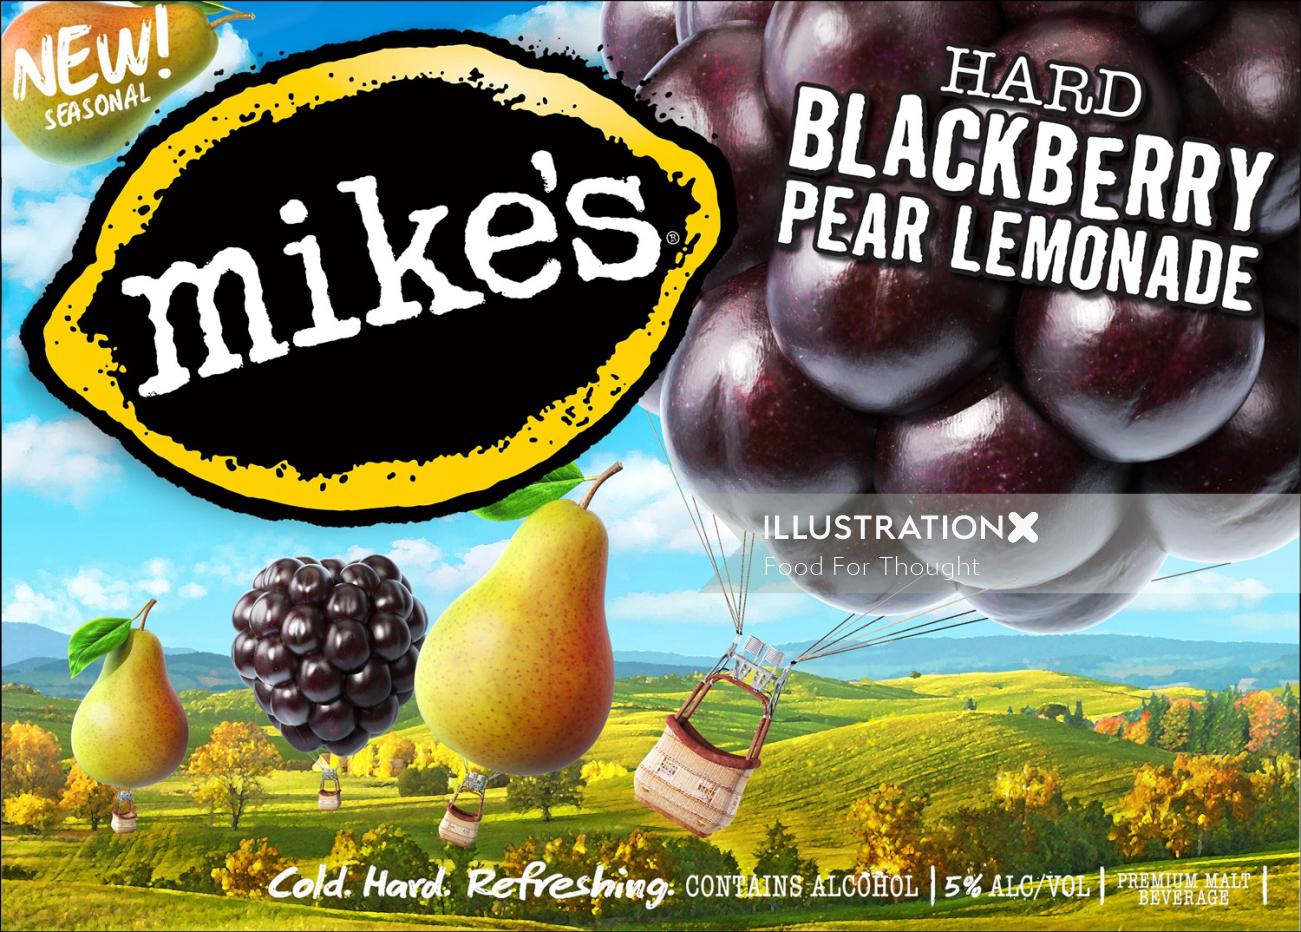 Mike&#39;s Hard Blackberry Pear Lemonadeの広告イラスト